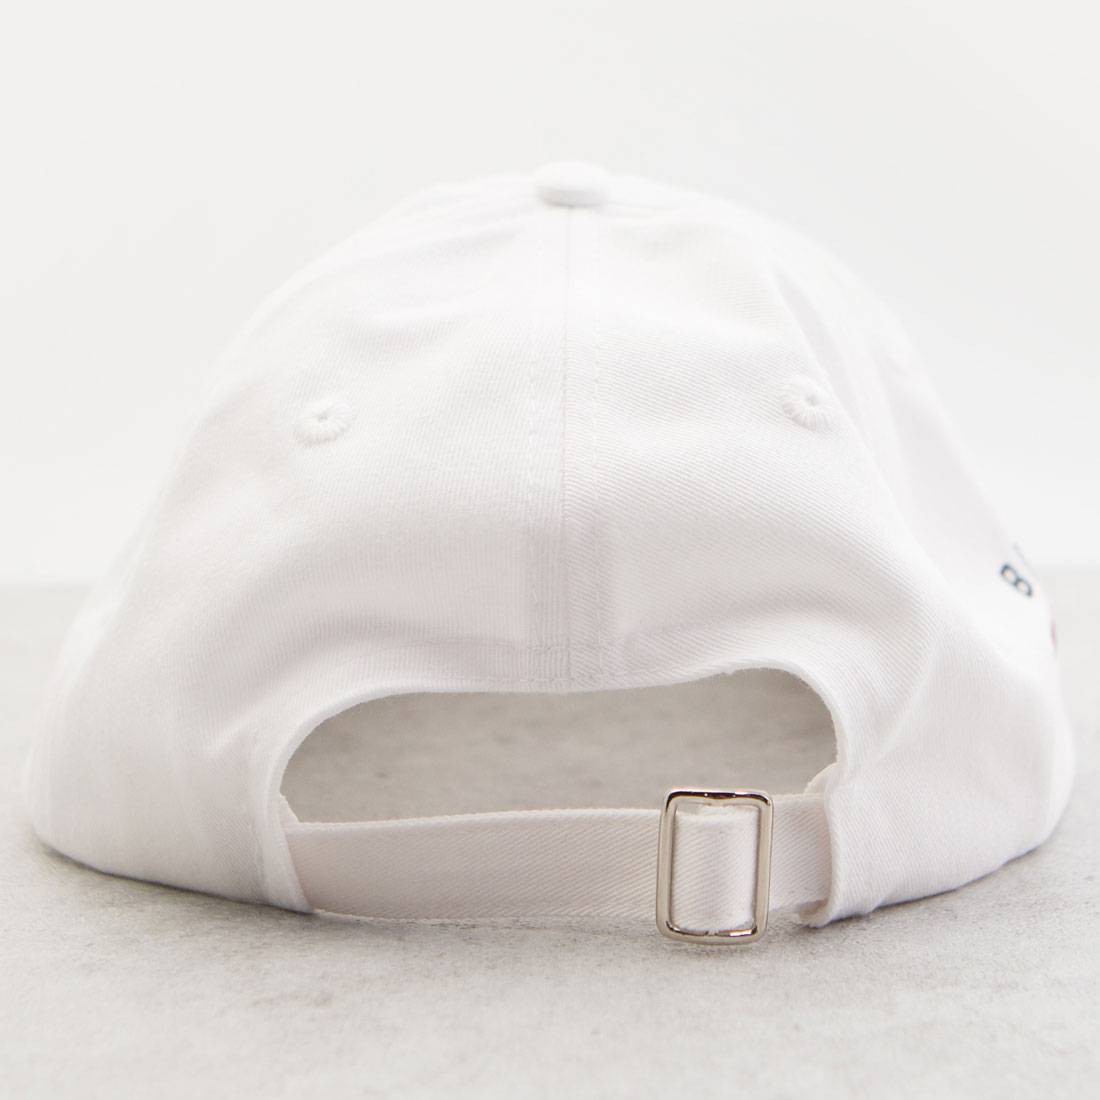 Fedora-silhouette ® Panama Hat that will banish those harsh rays in style